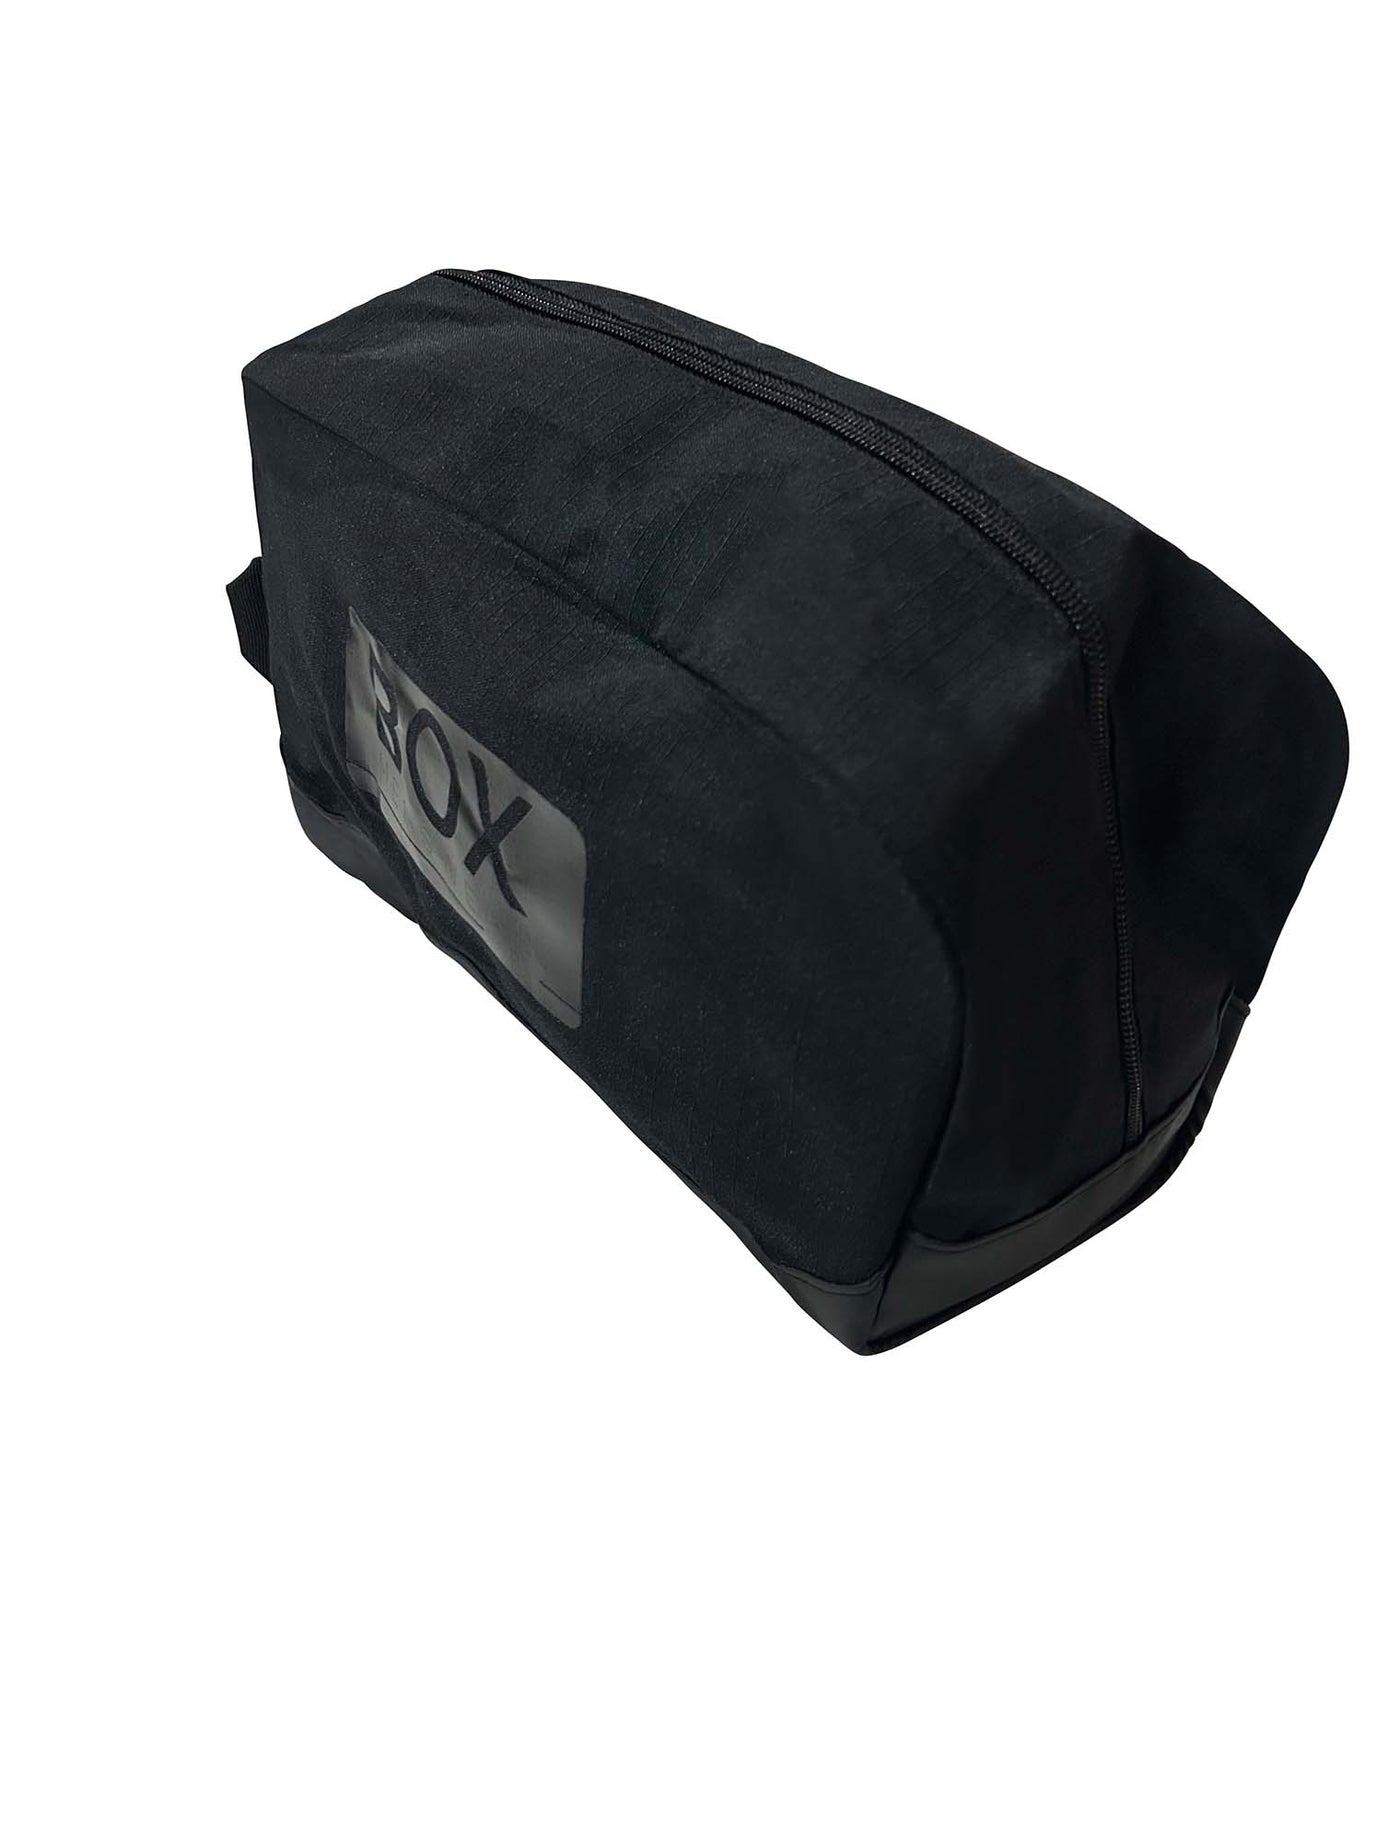 Toiletry Bag - Black - boxmenswear - {{variant_title}}